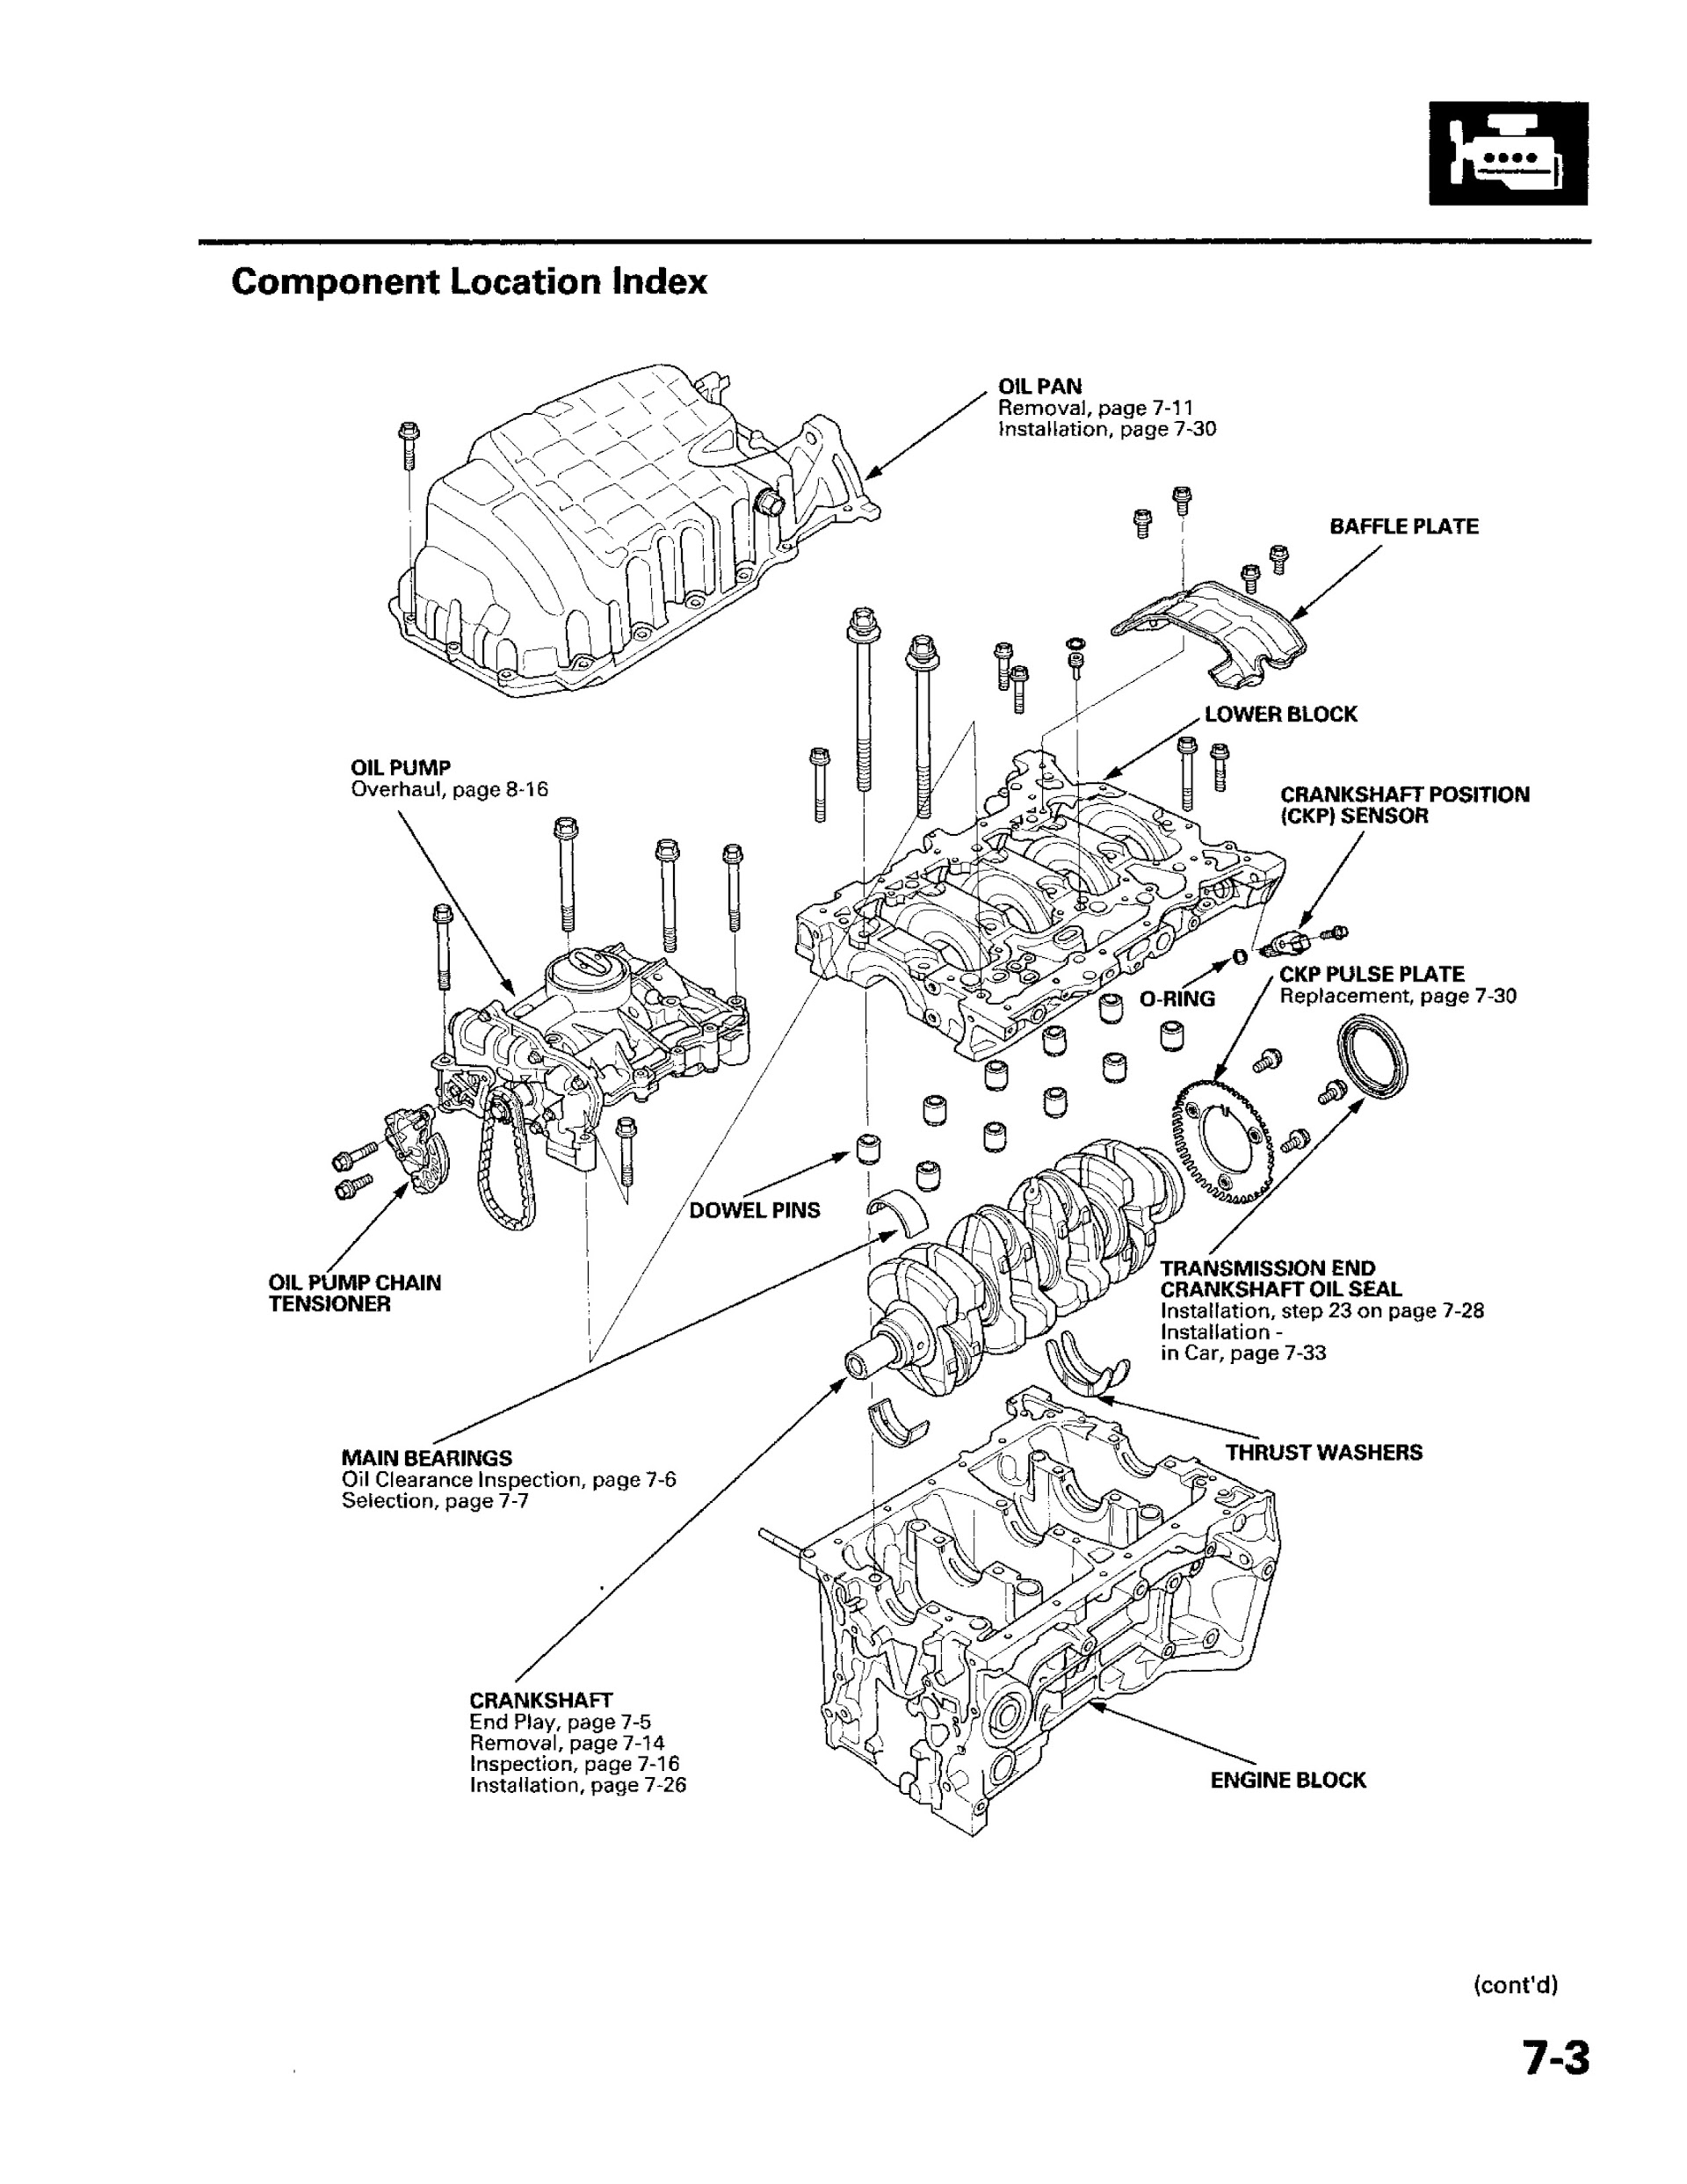 Honda Accord Repair Manual (2008–2010) PDF, Component Locations Index